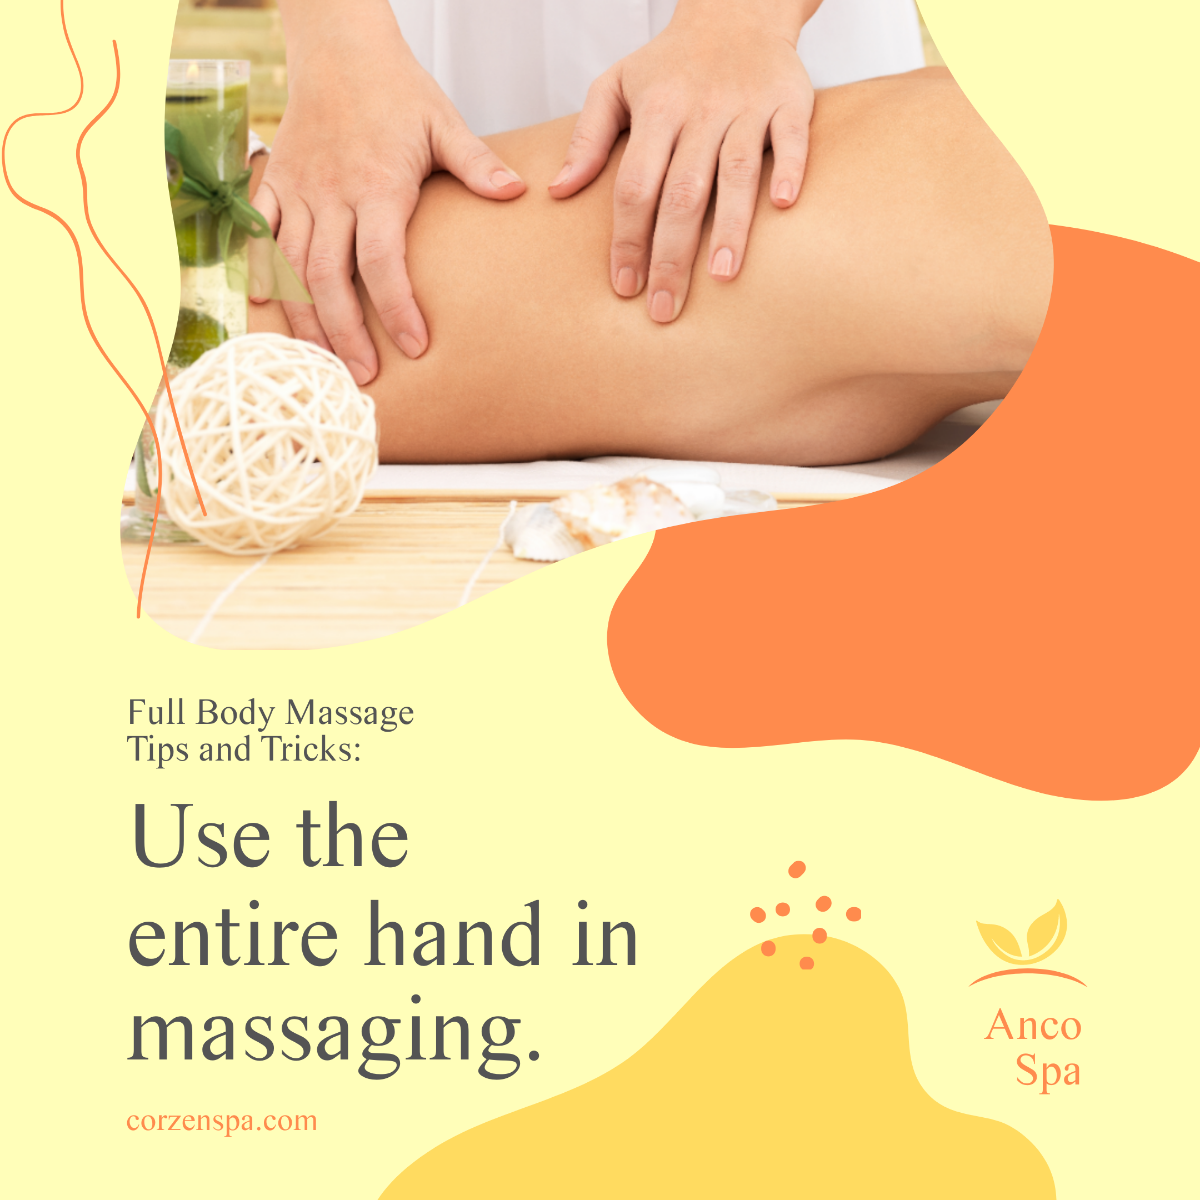 Full Body Massage Tips And Tricks Post, Instagram, Facebook